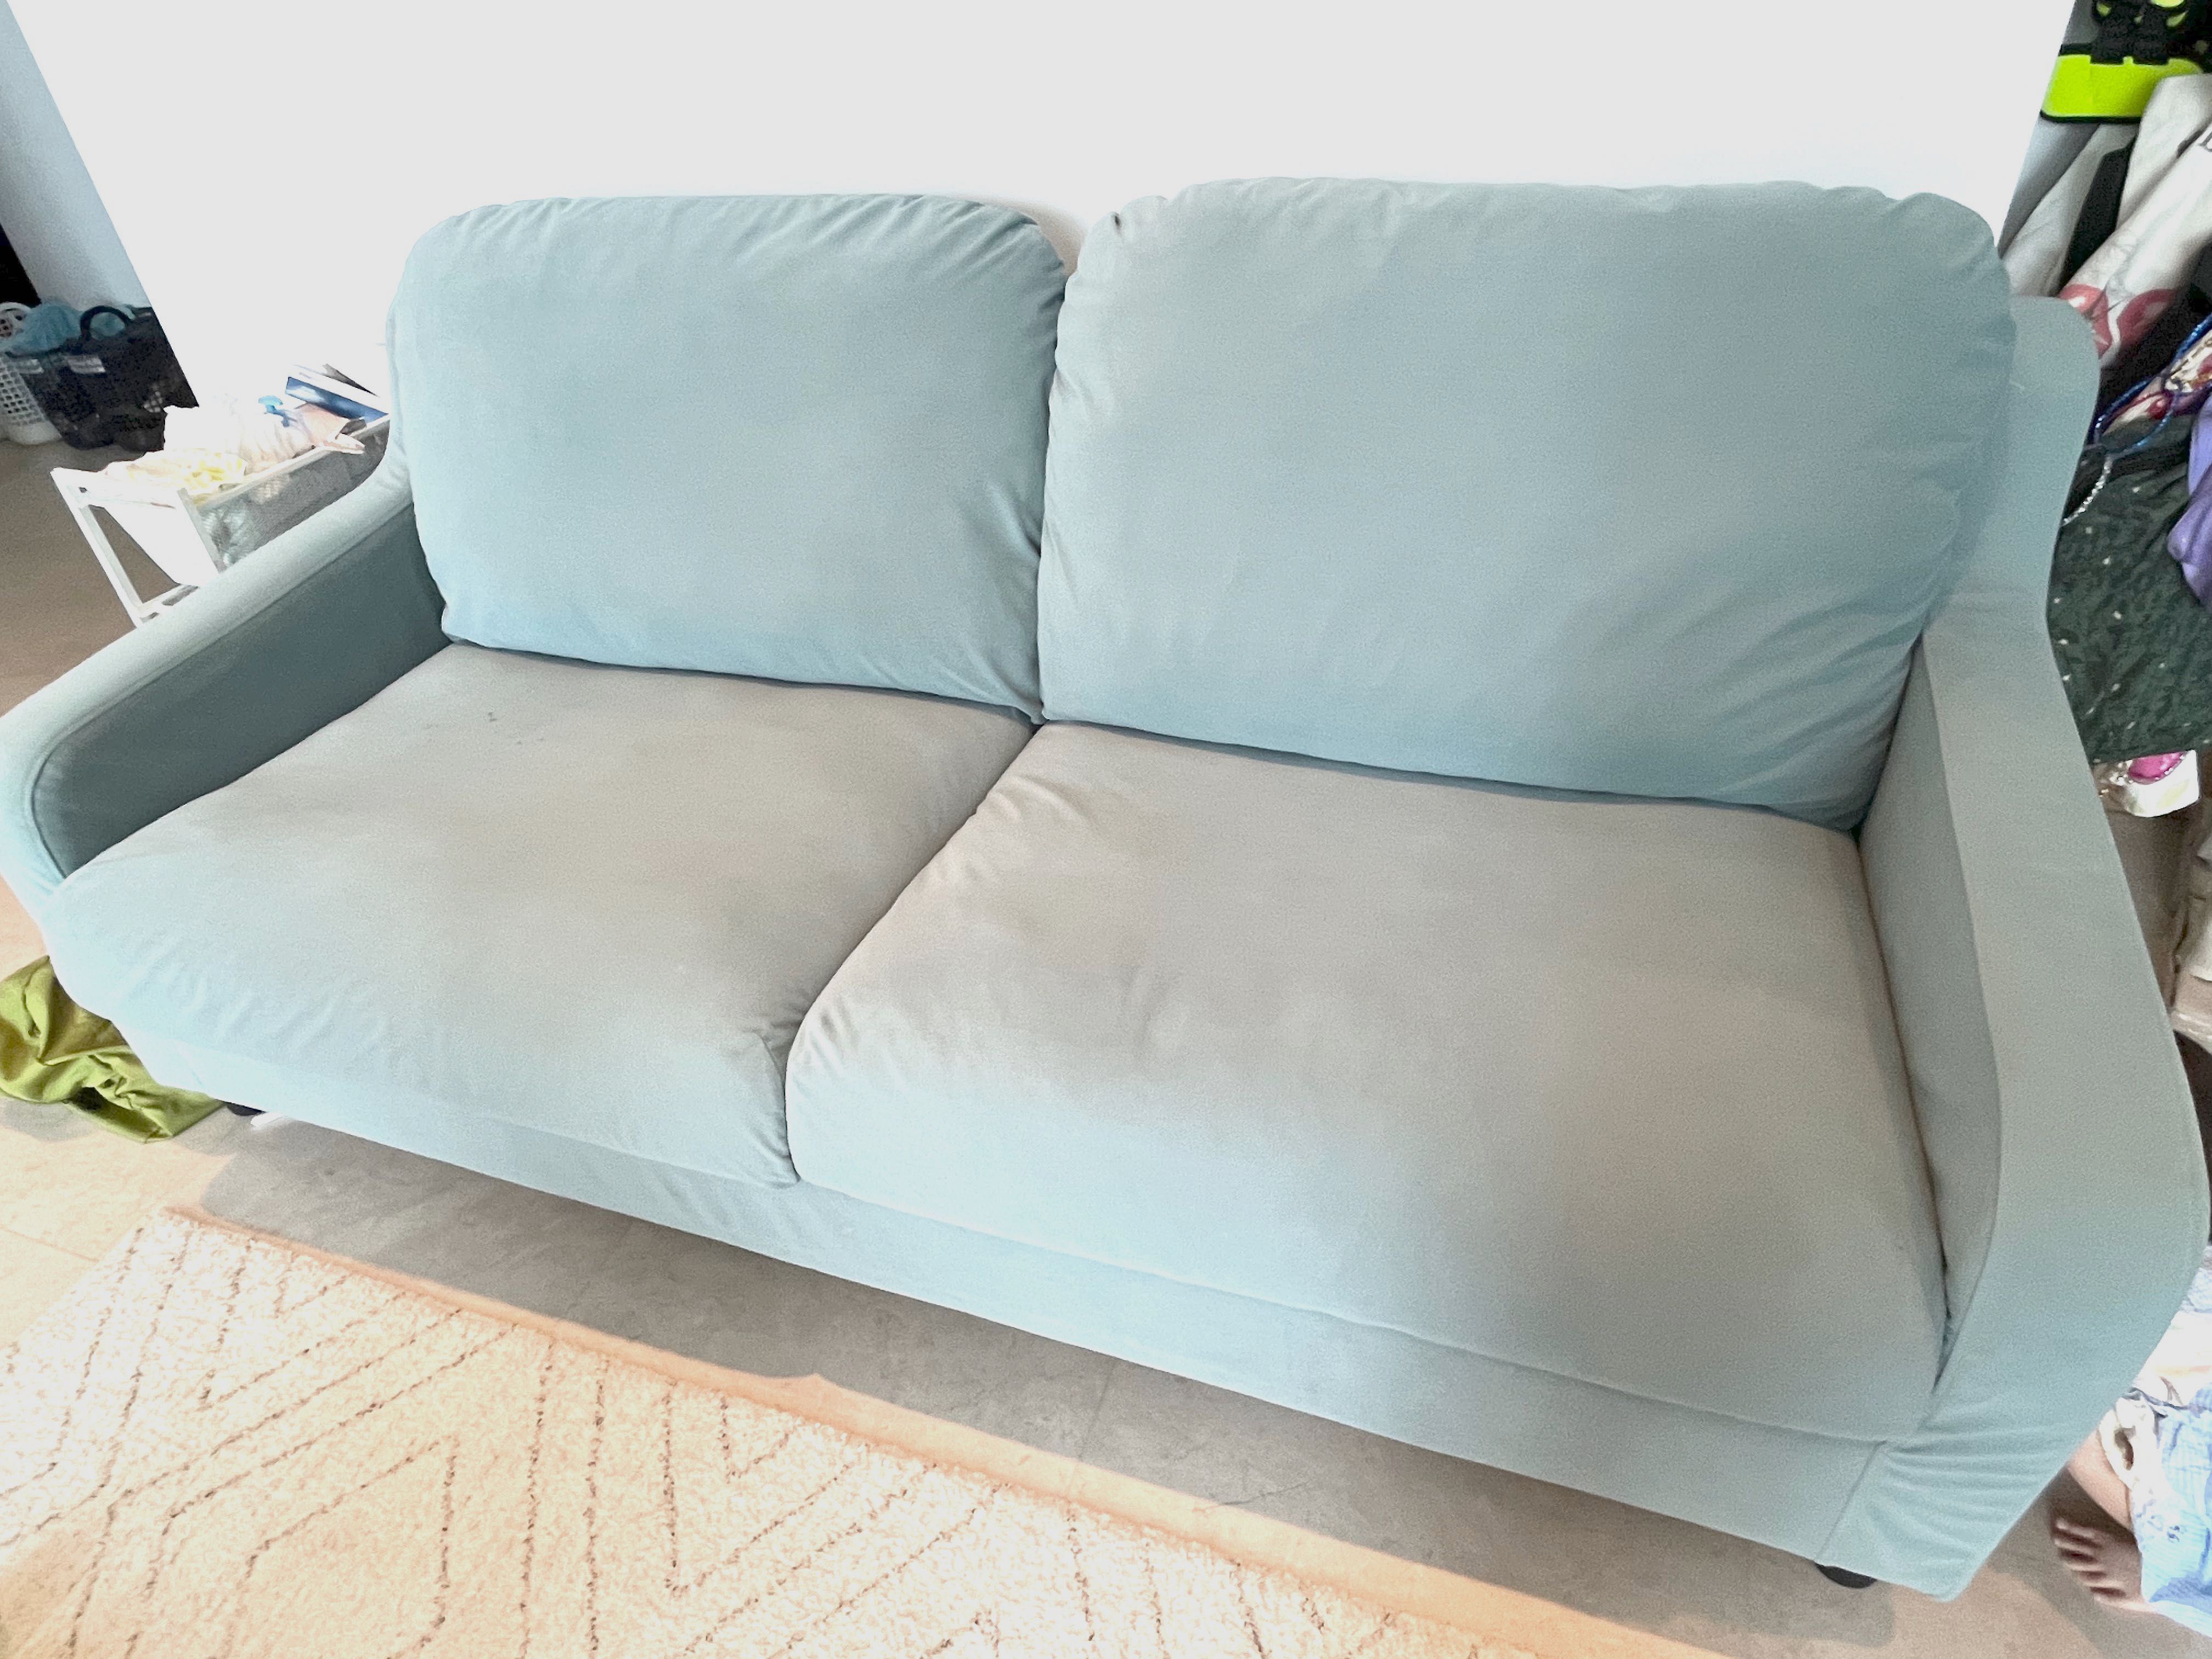 IKEA 3 seater sofa VINLIDEN, Furniture & Home Living, Furniture, Sofas on  Carousell